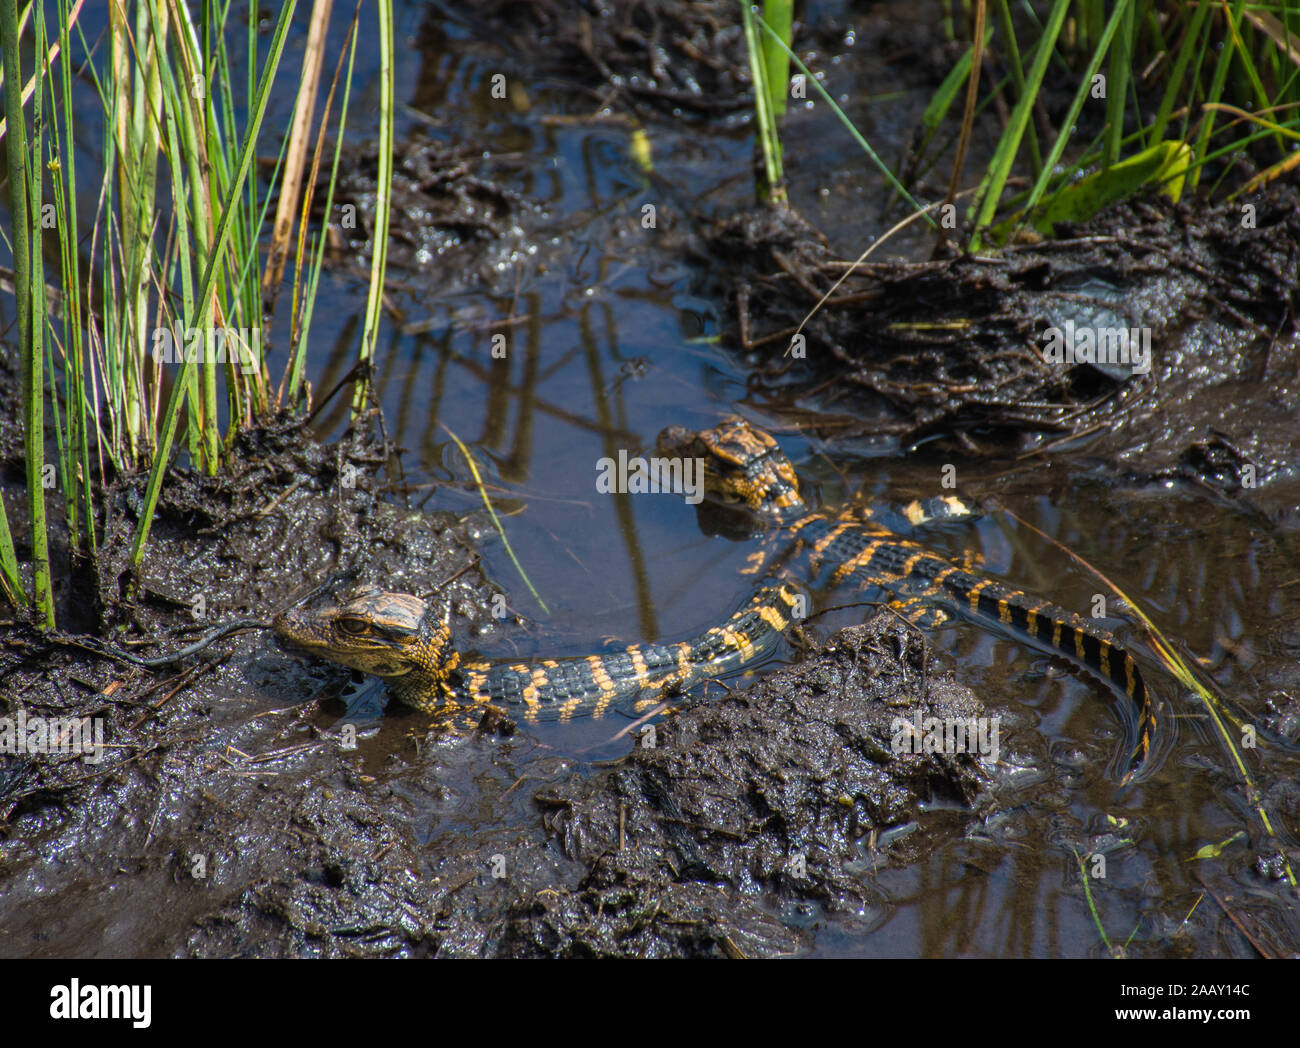 Discovering Florida's wildlife : baby alligators Stock Photo